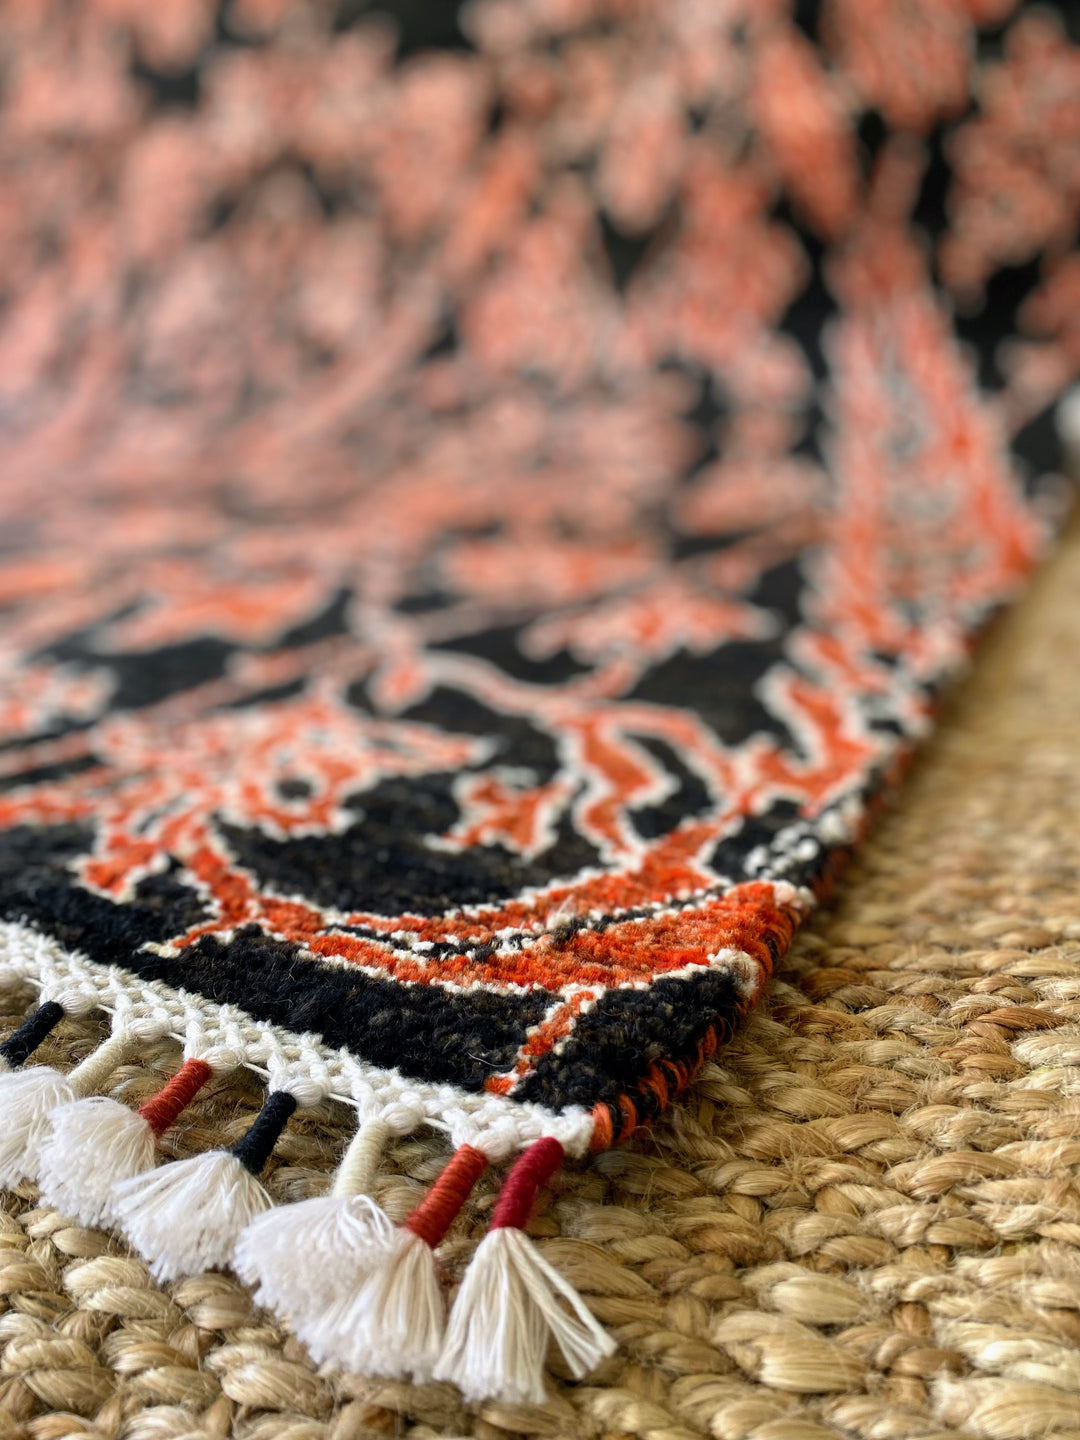 Pavage - Size: 9.7 x 5.7 - Imam Carpet Co